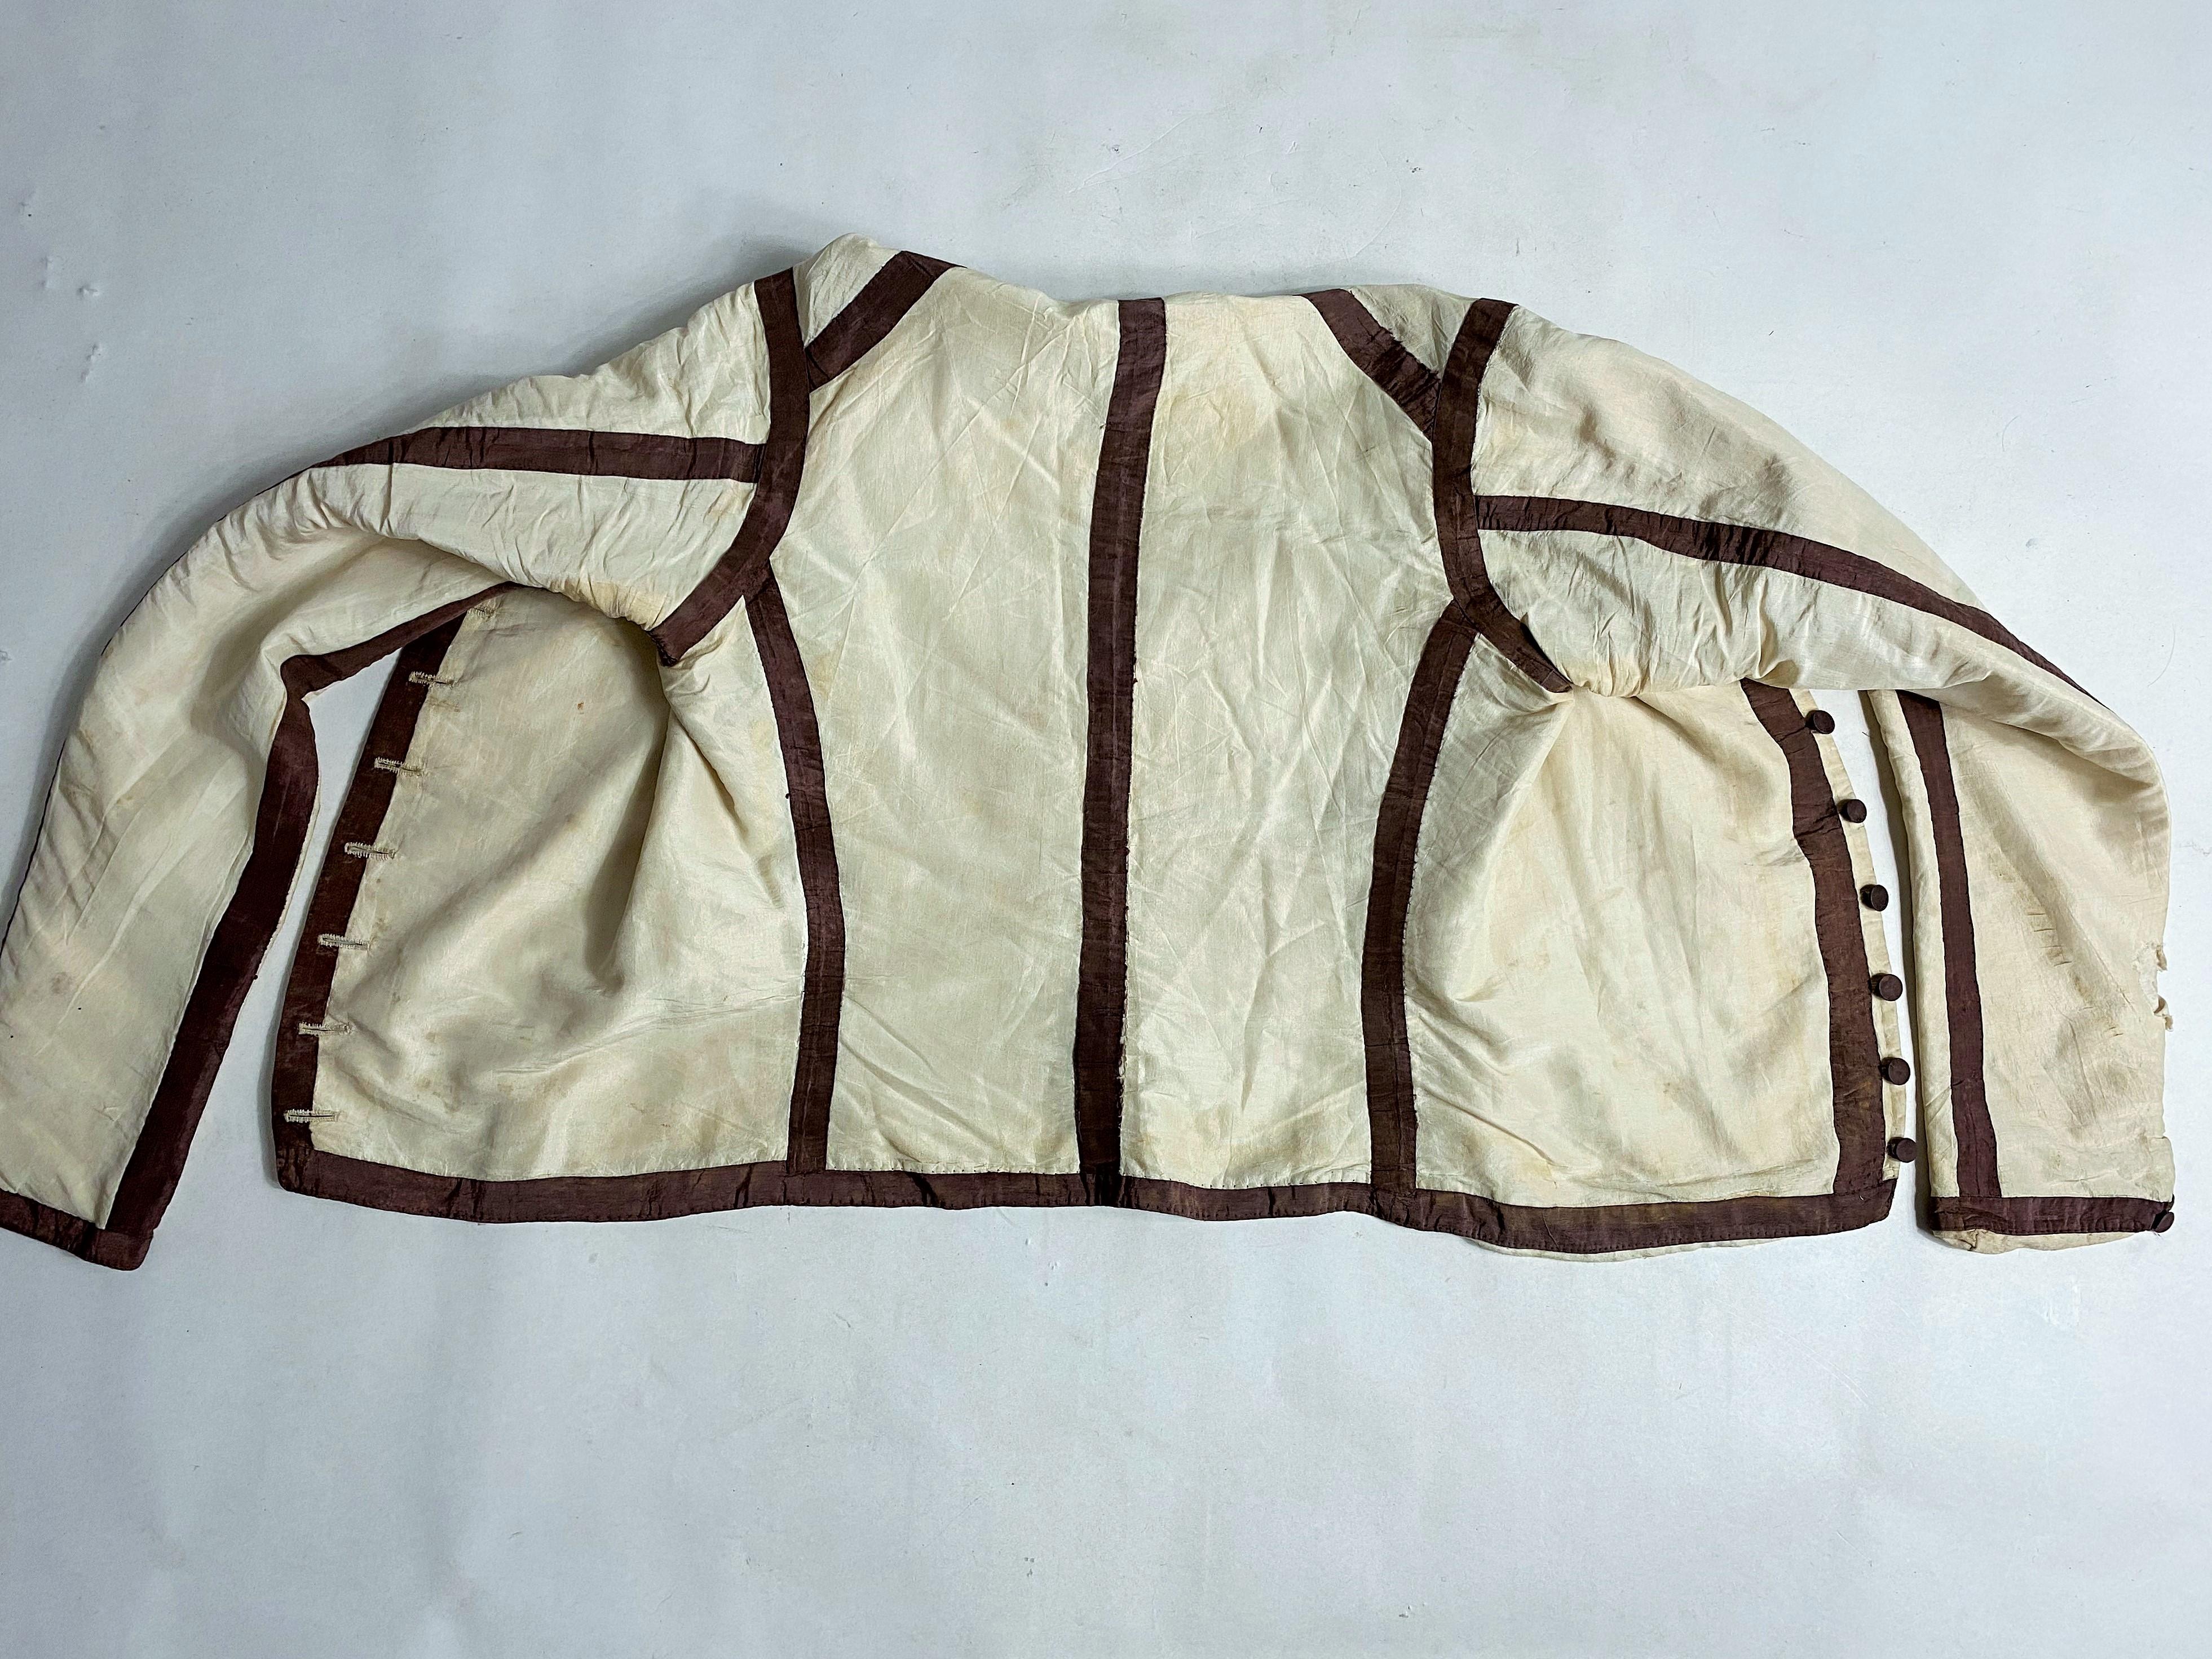 Men's A Rare Jockey (?) Silk jumpsuit and breeches - England 18th century